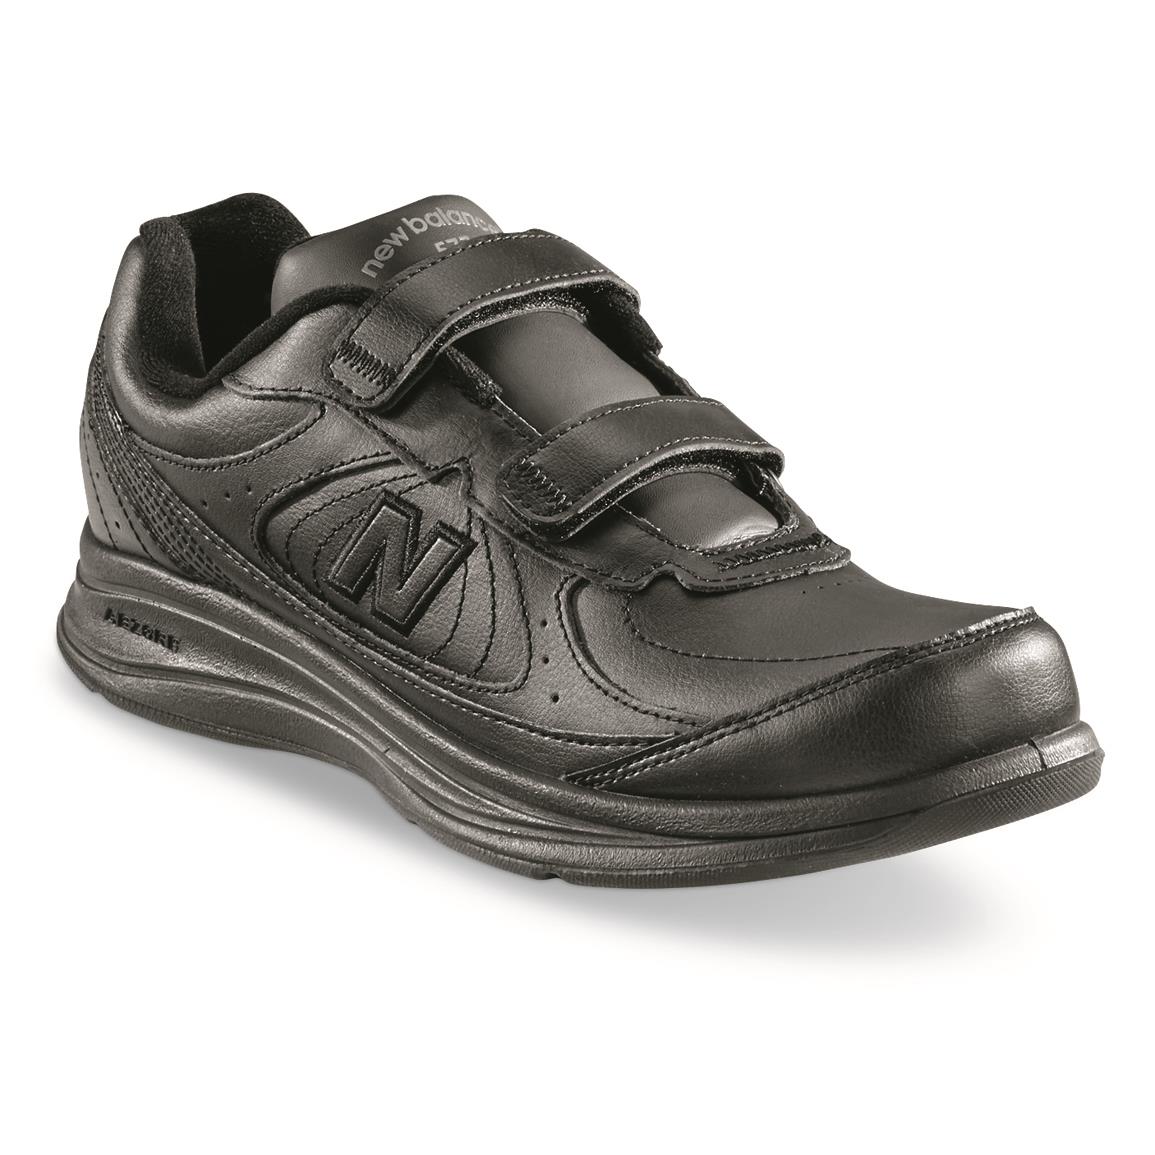 New Balance Men's Hook-and-loop 577 Walking Shoes, Black